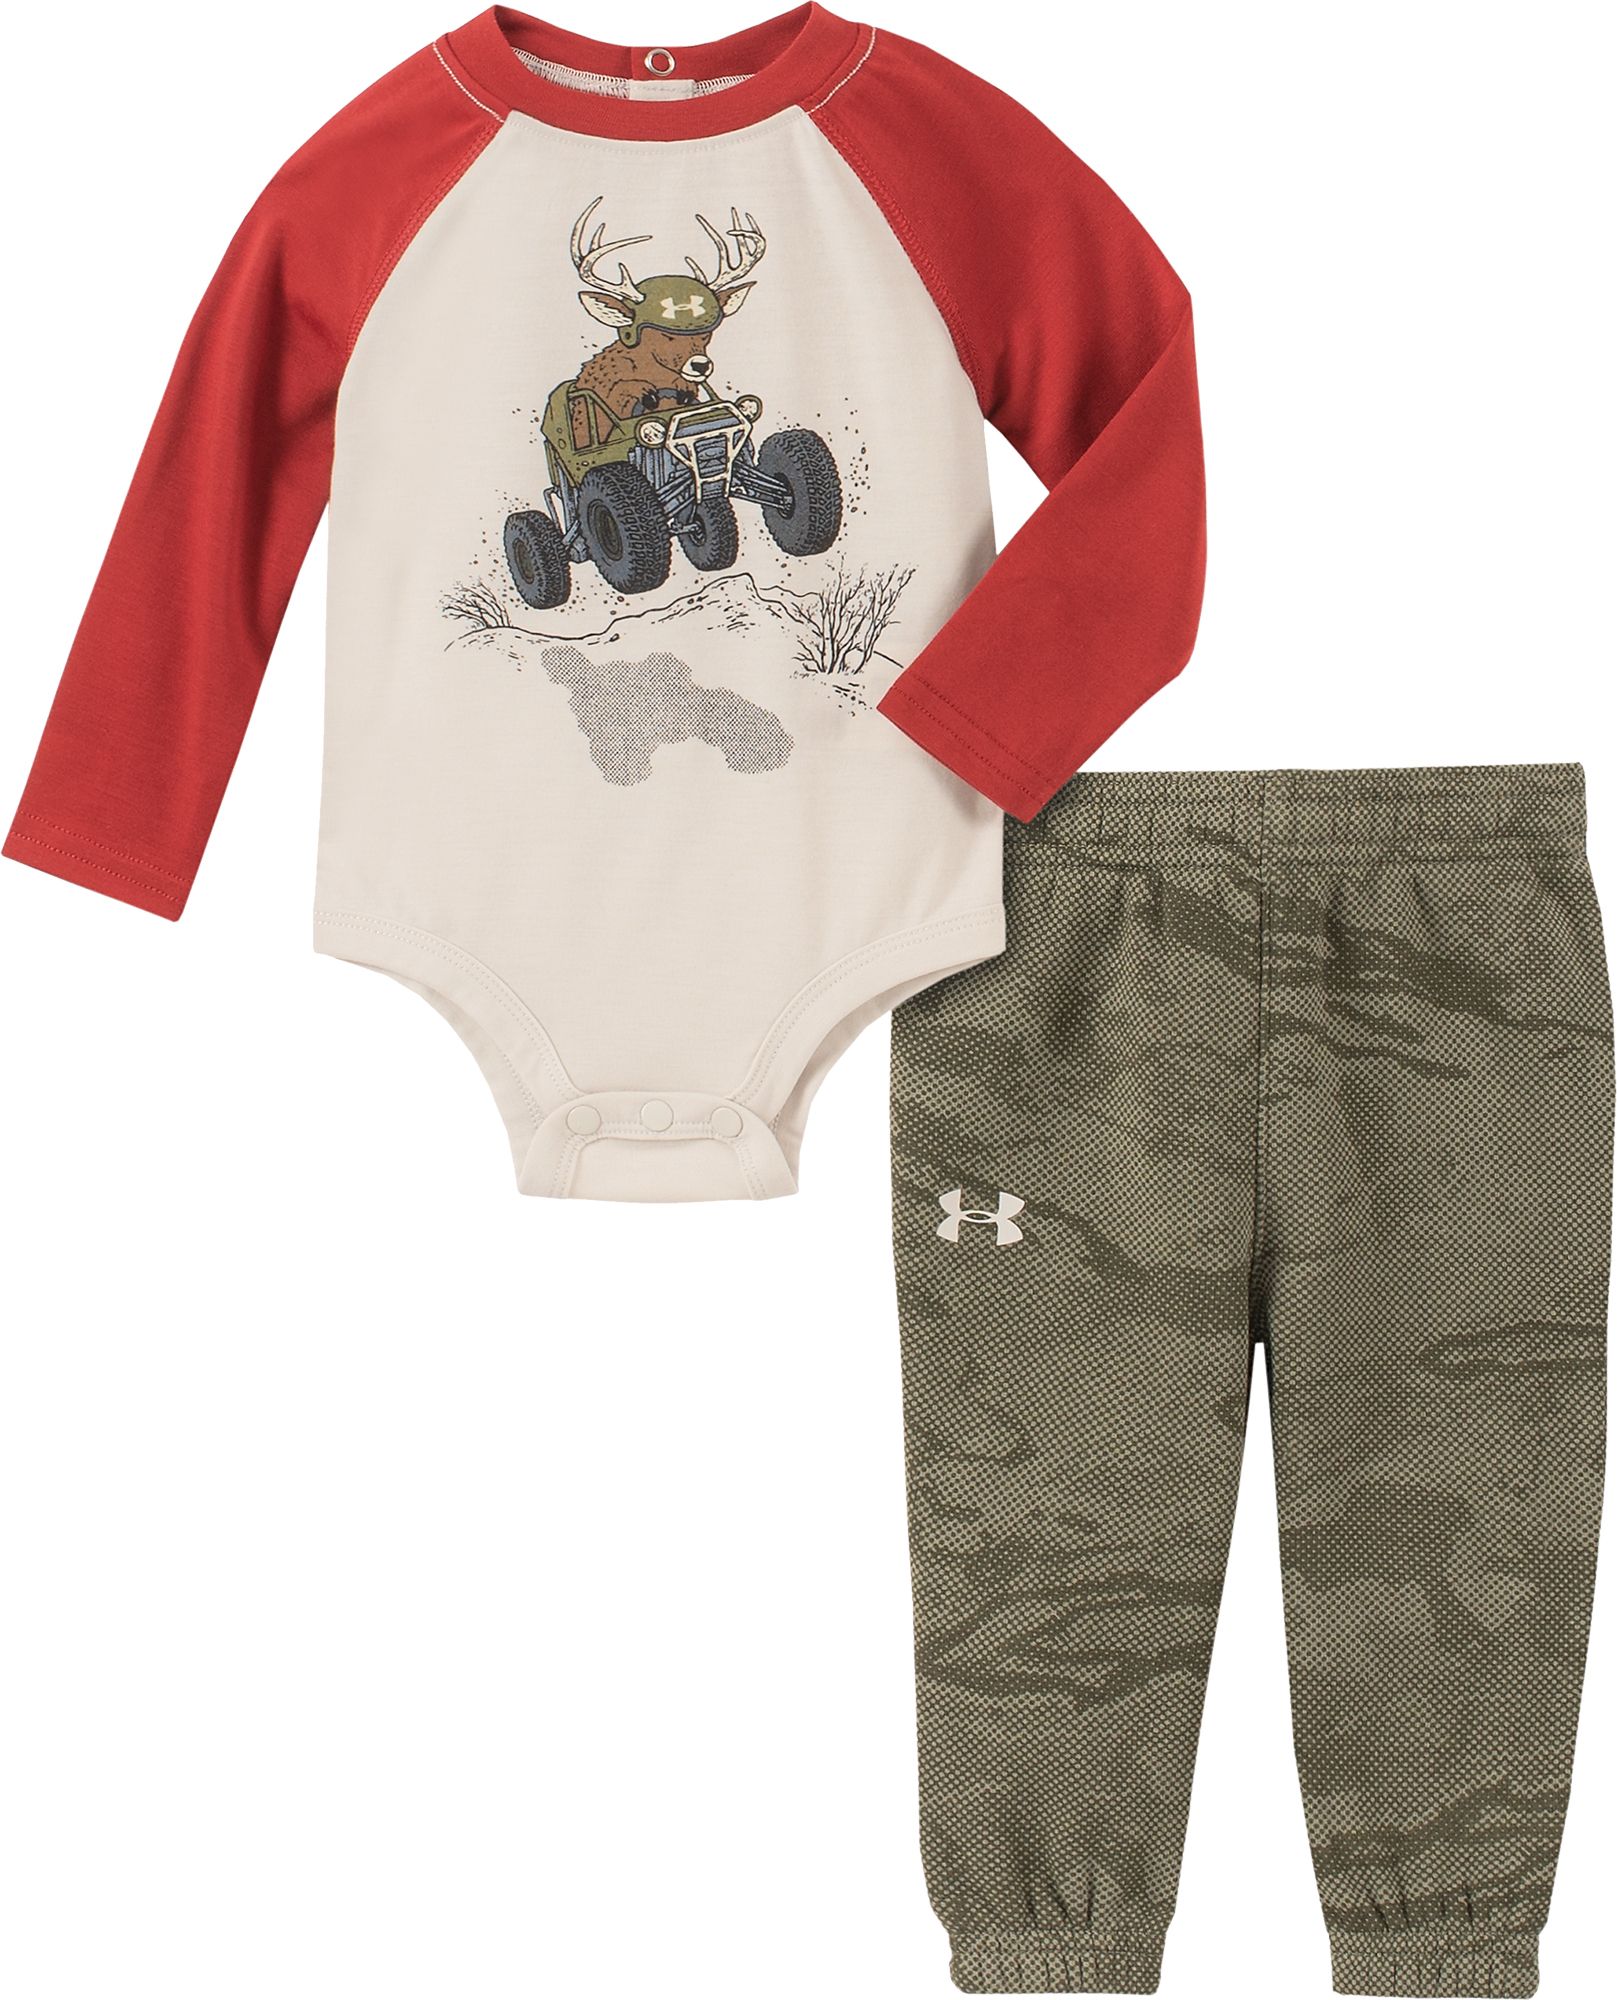 under armor infant boy clothes